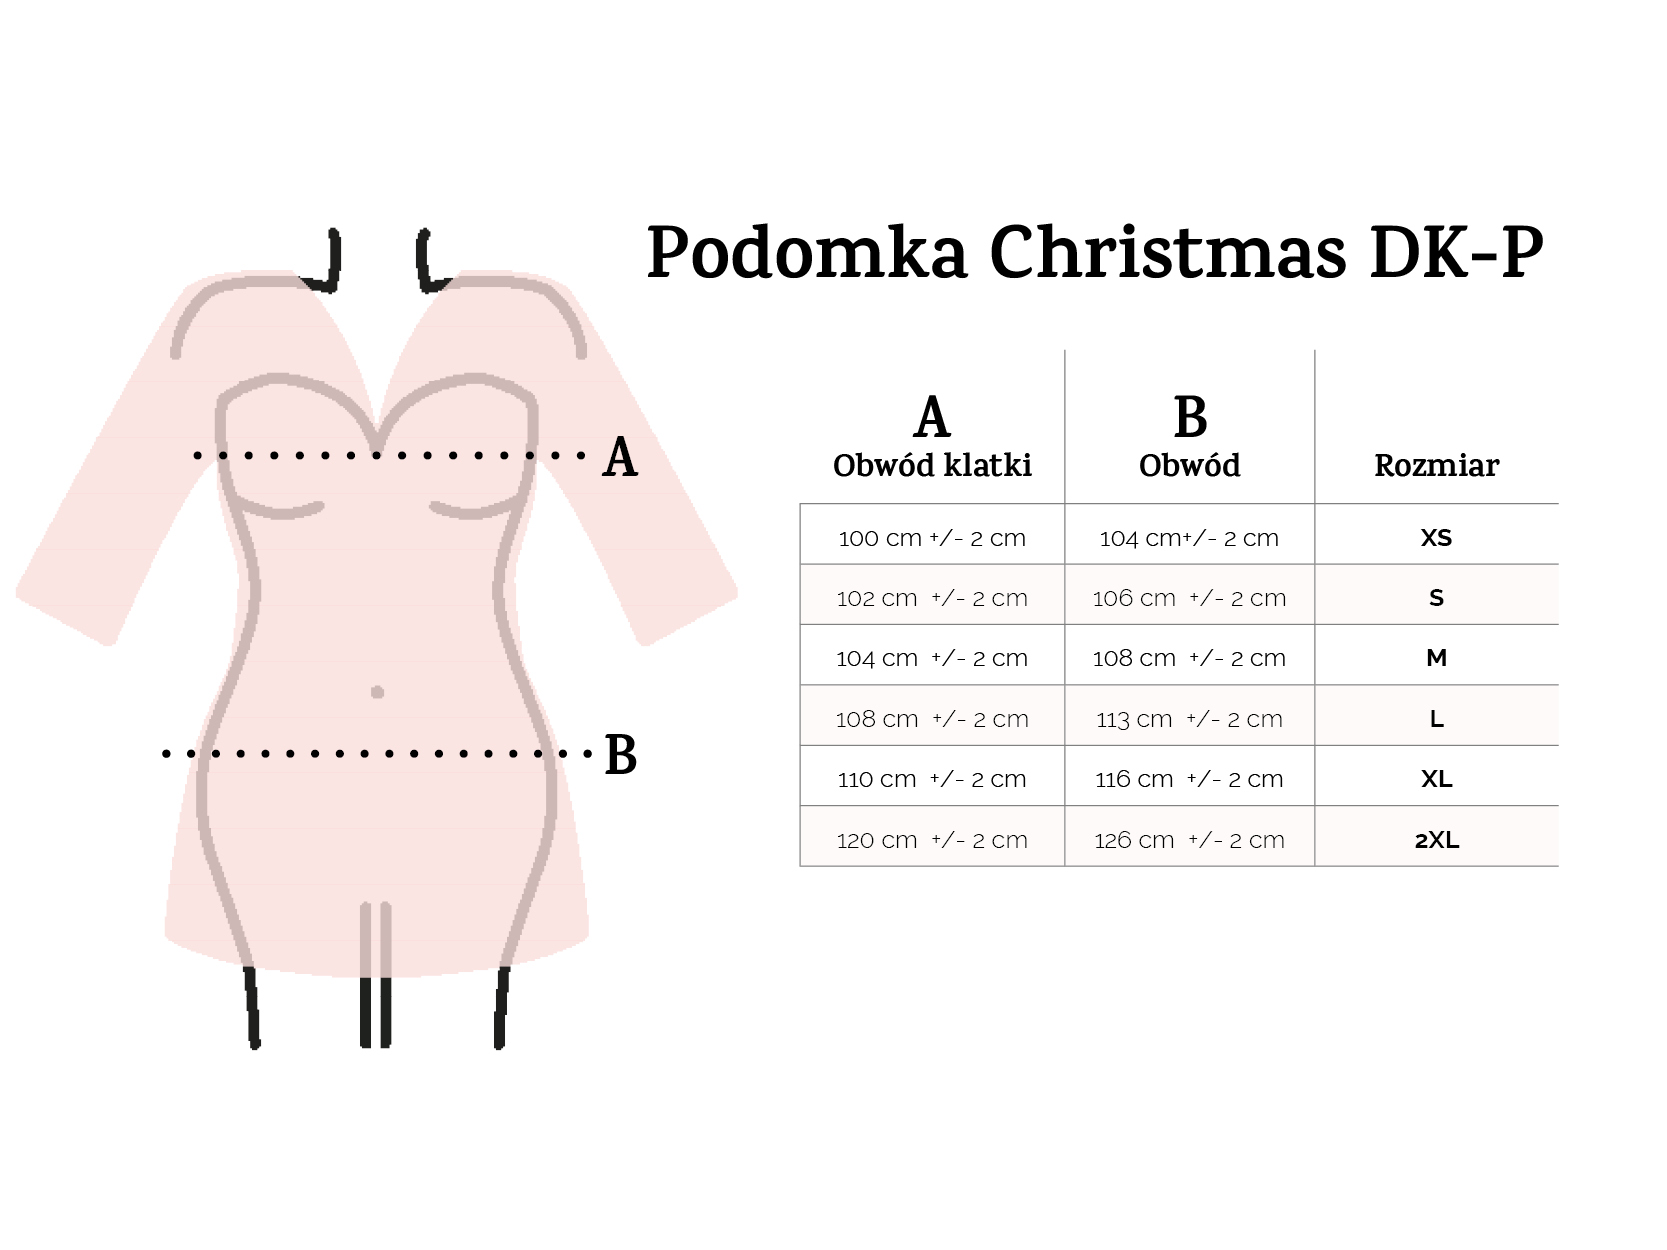 Podomka Christmas DK-P